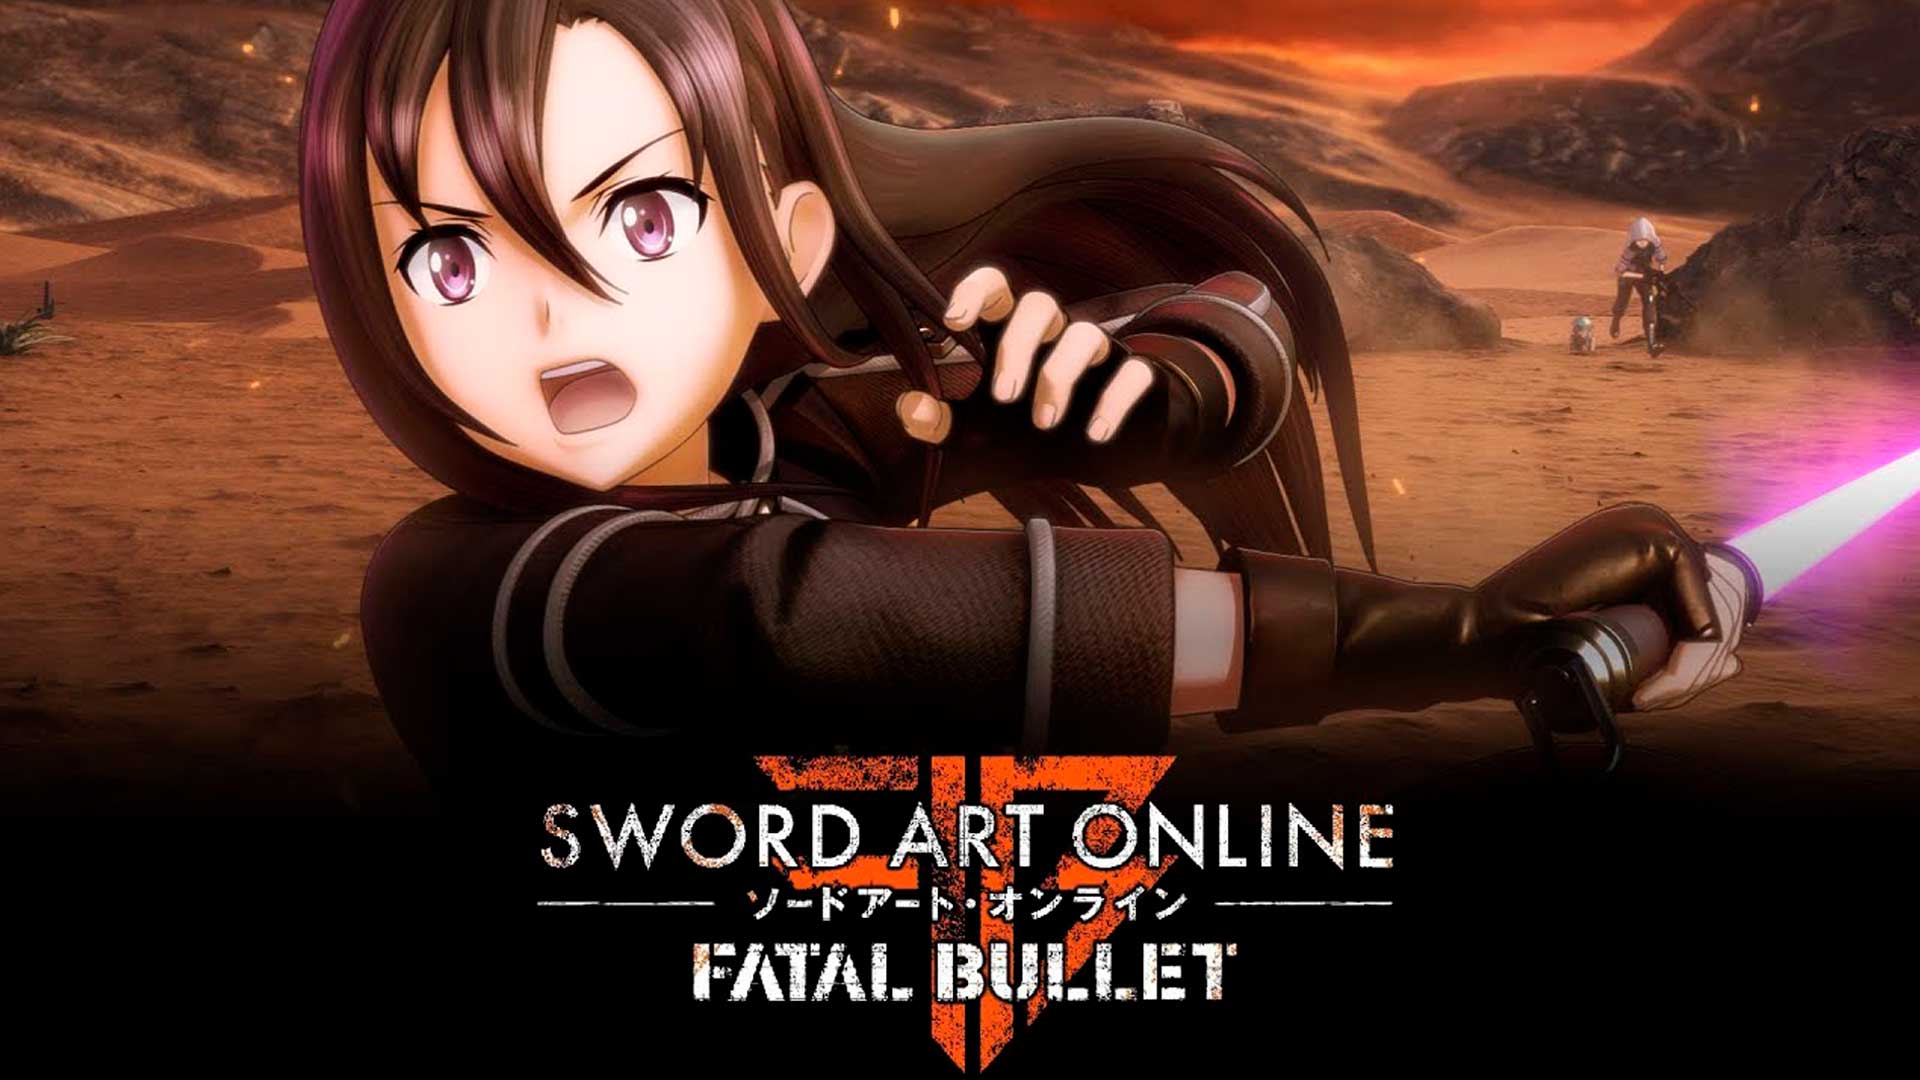 Sword Art Online Announces New Season